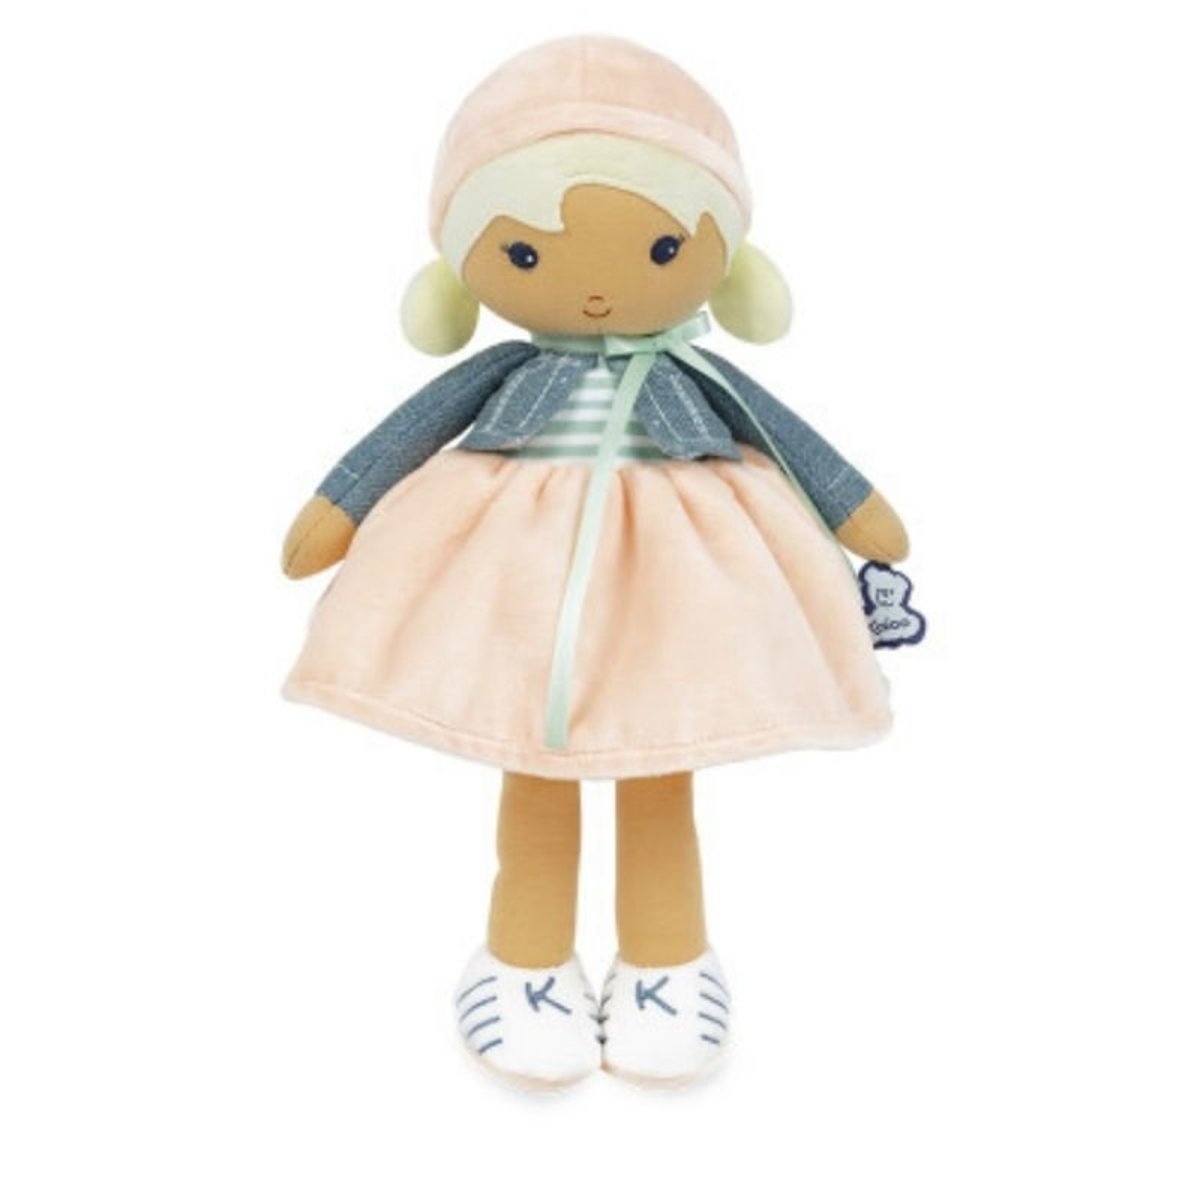 Tendresse Doll - Medium size